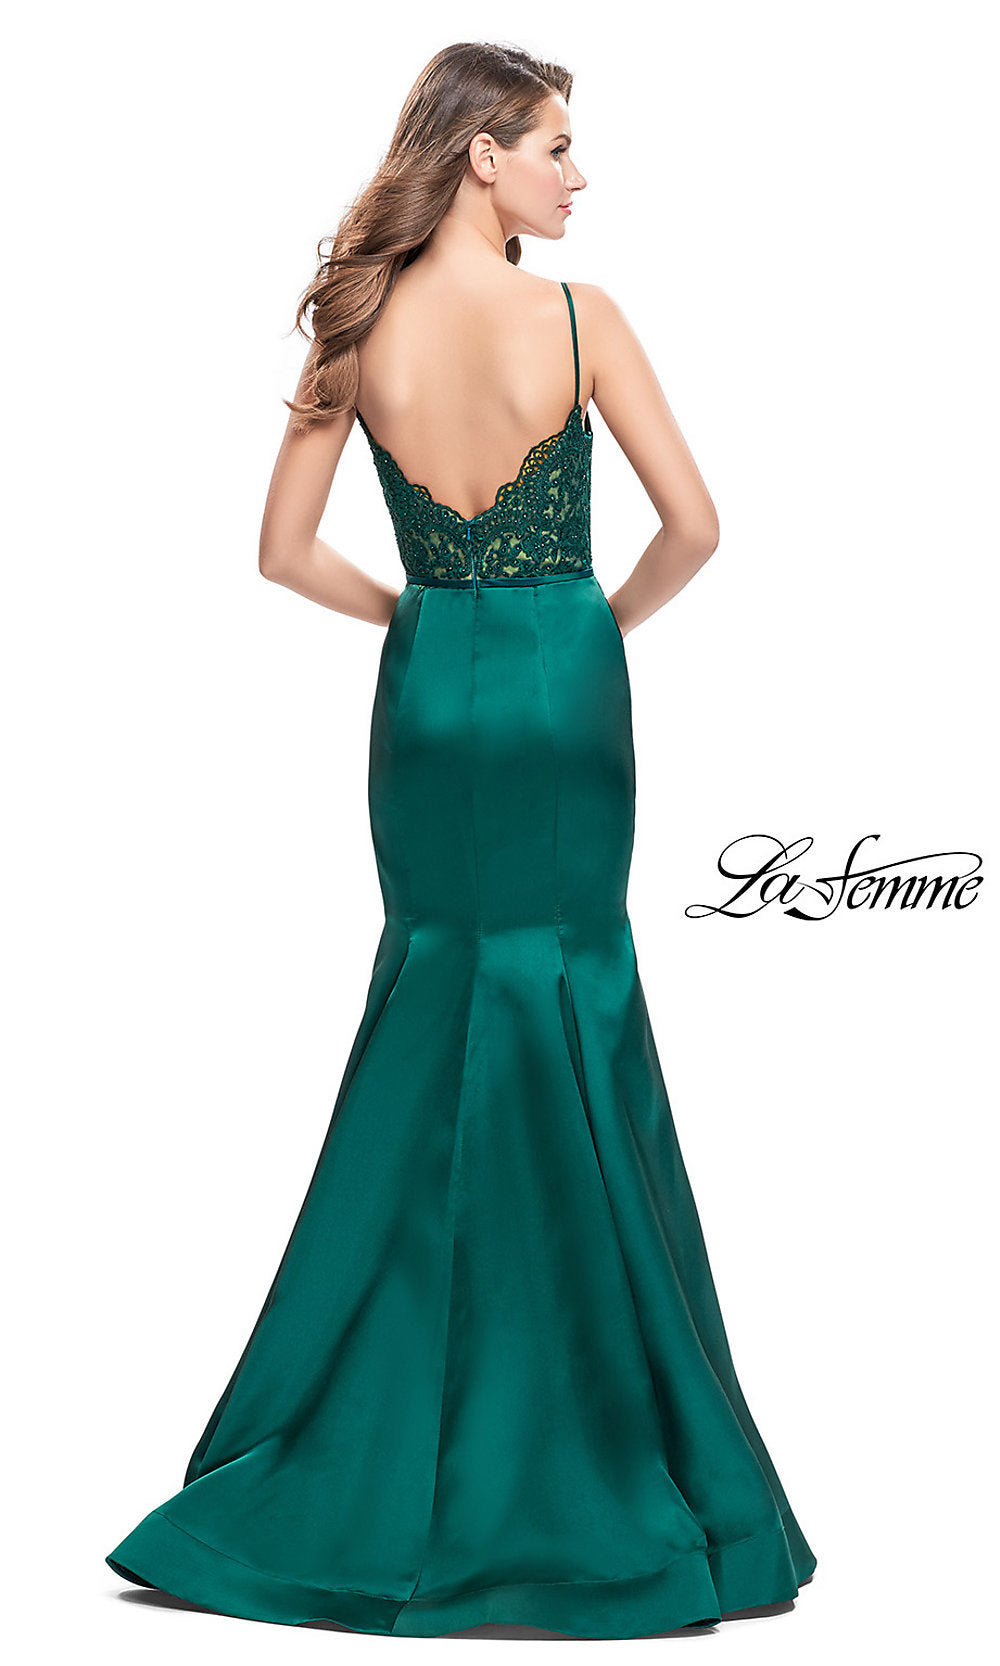  Long Spaghetti-Strap Mermaid-Style Prom Dress